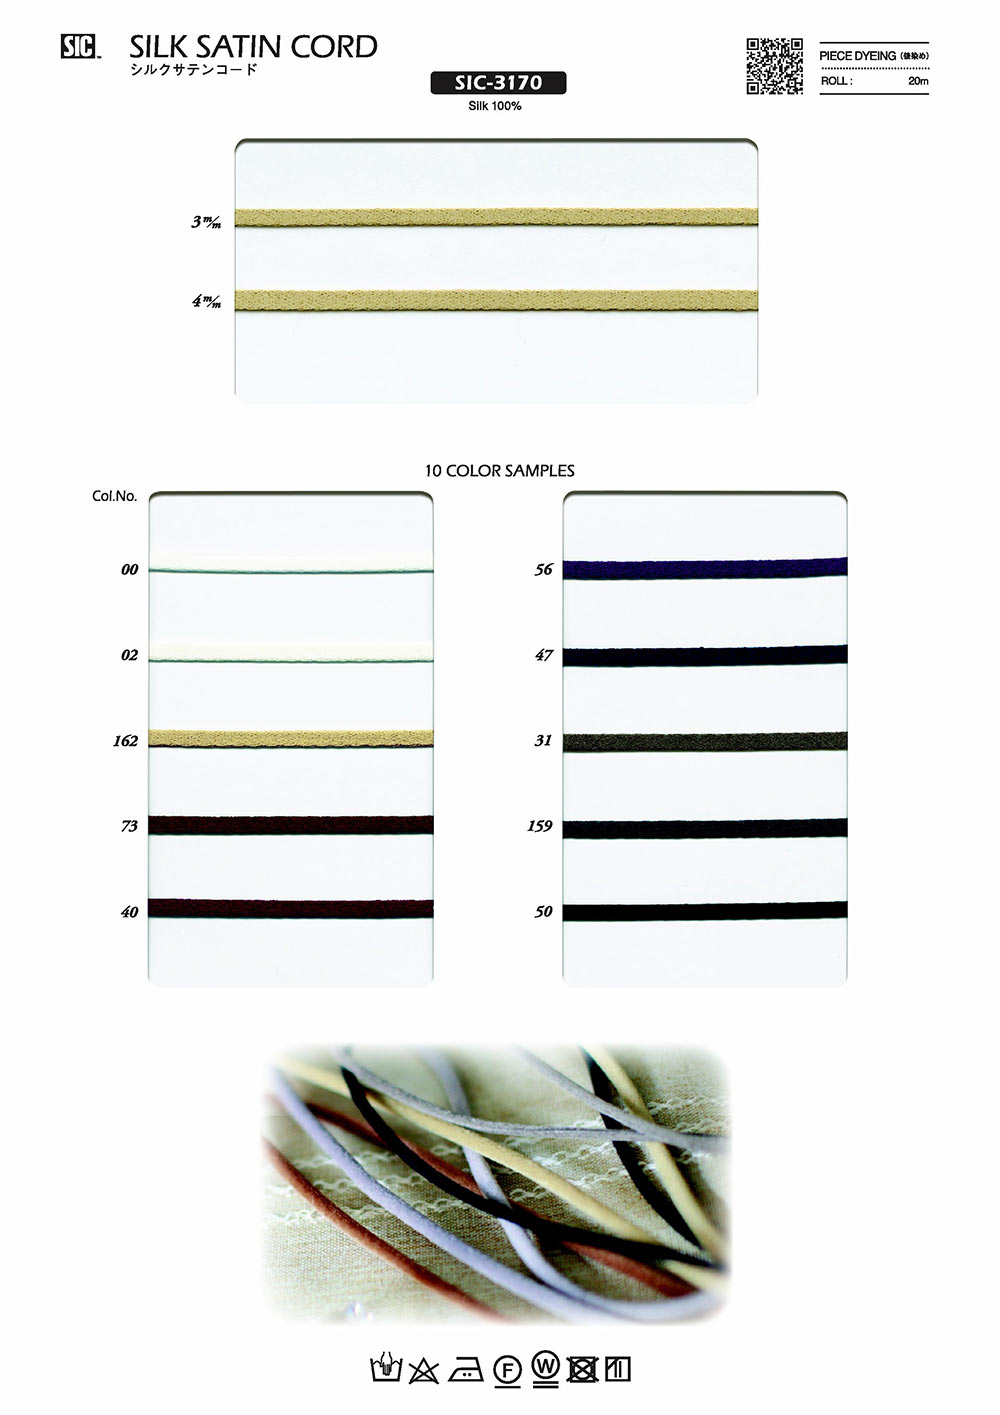 SIC-3170 Silk Satin Cord[Ribbon Tape Cord] SHINDO(SIC)